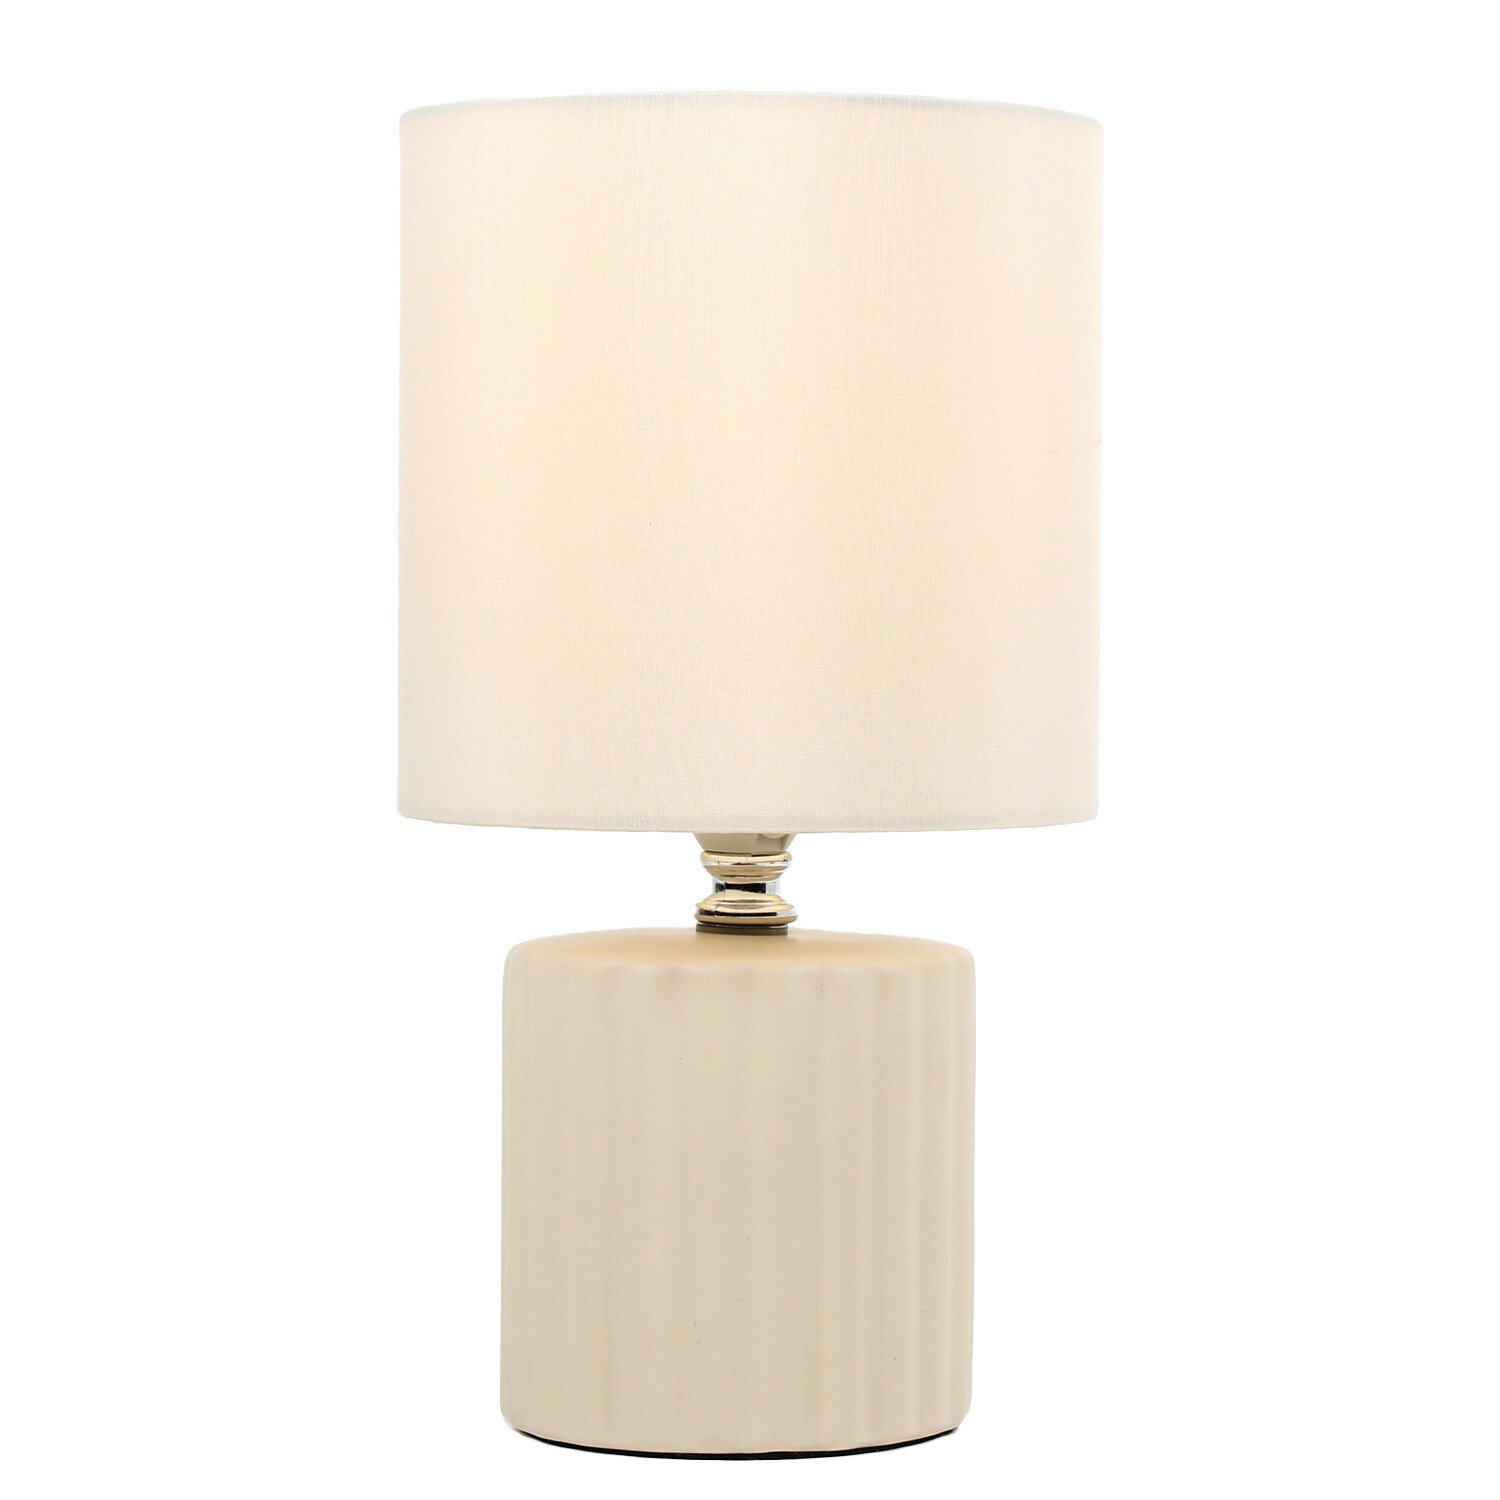 Ayla Table Lamp - Cream Image 1